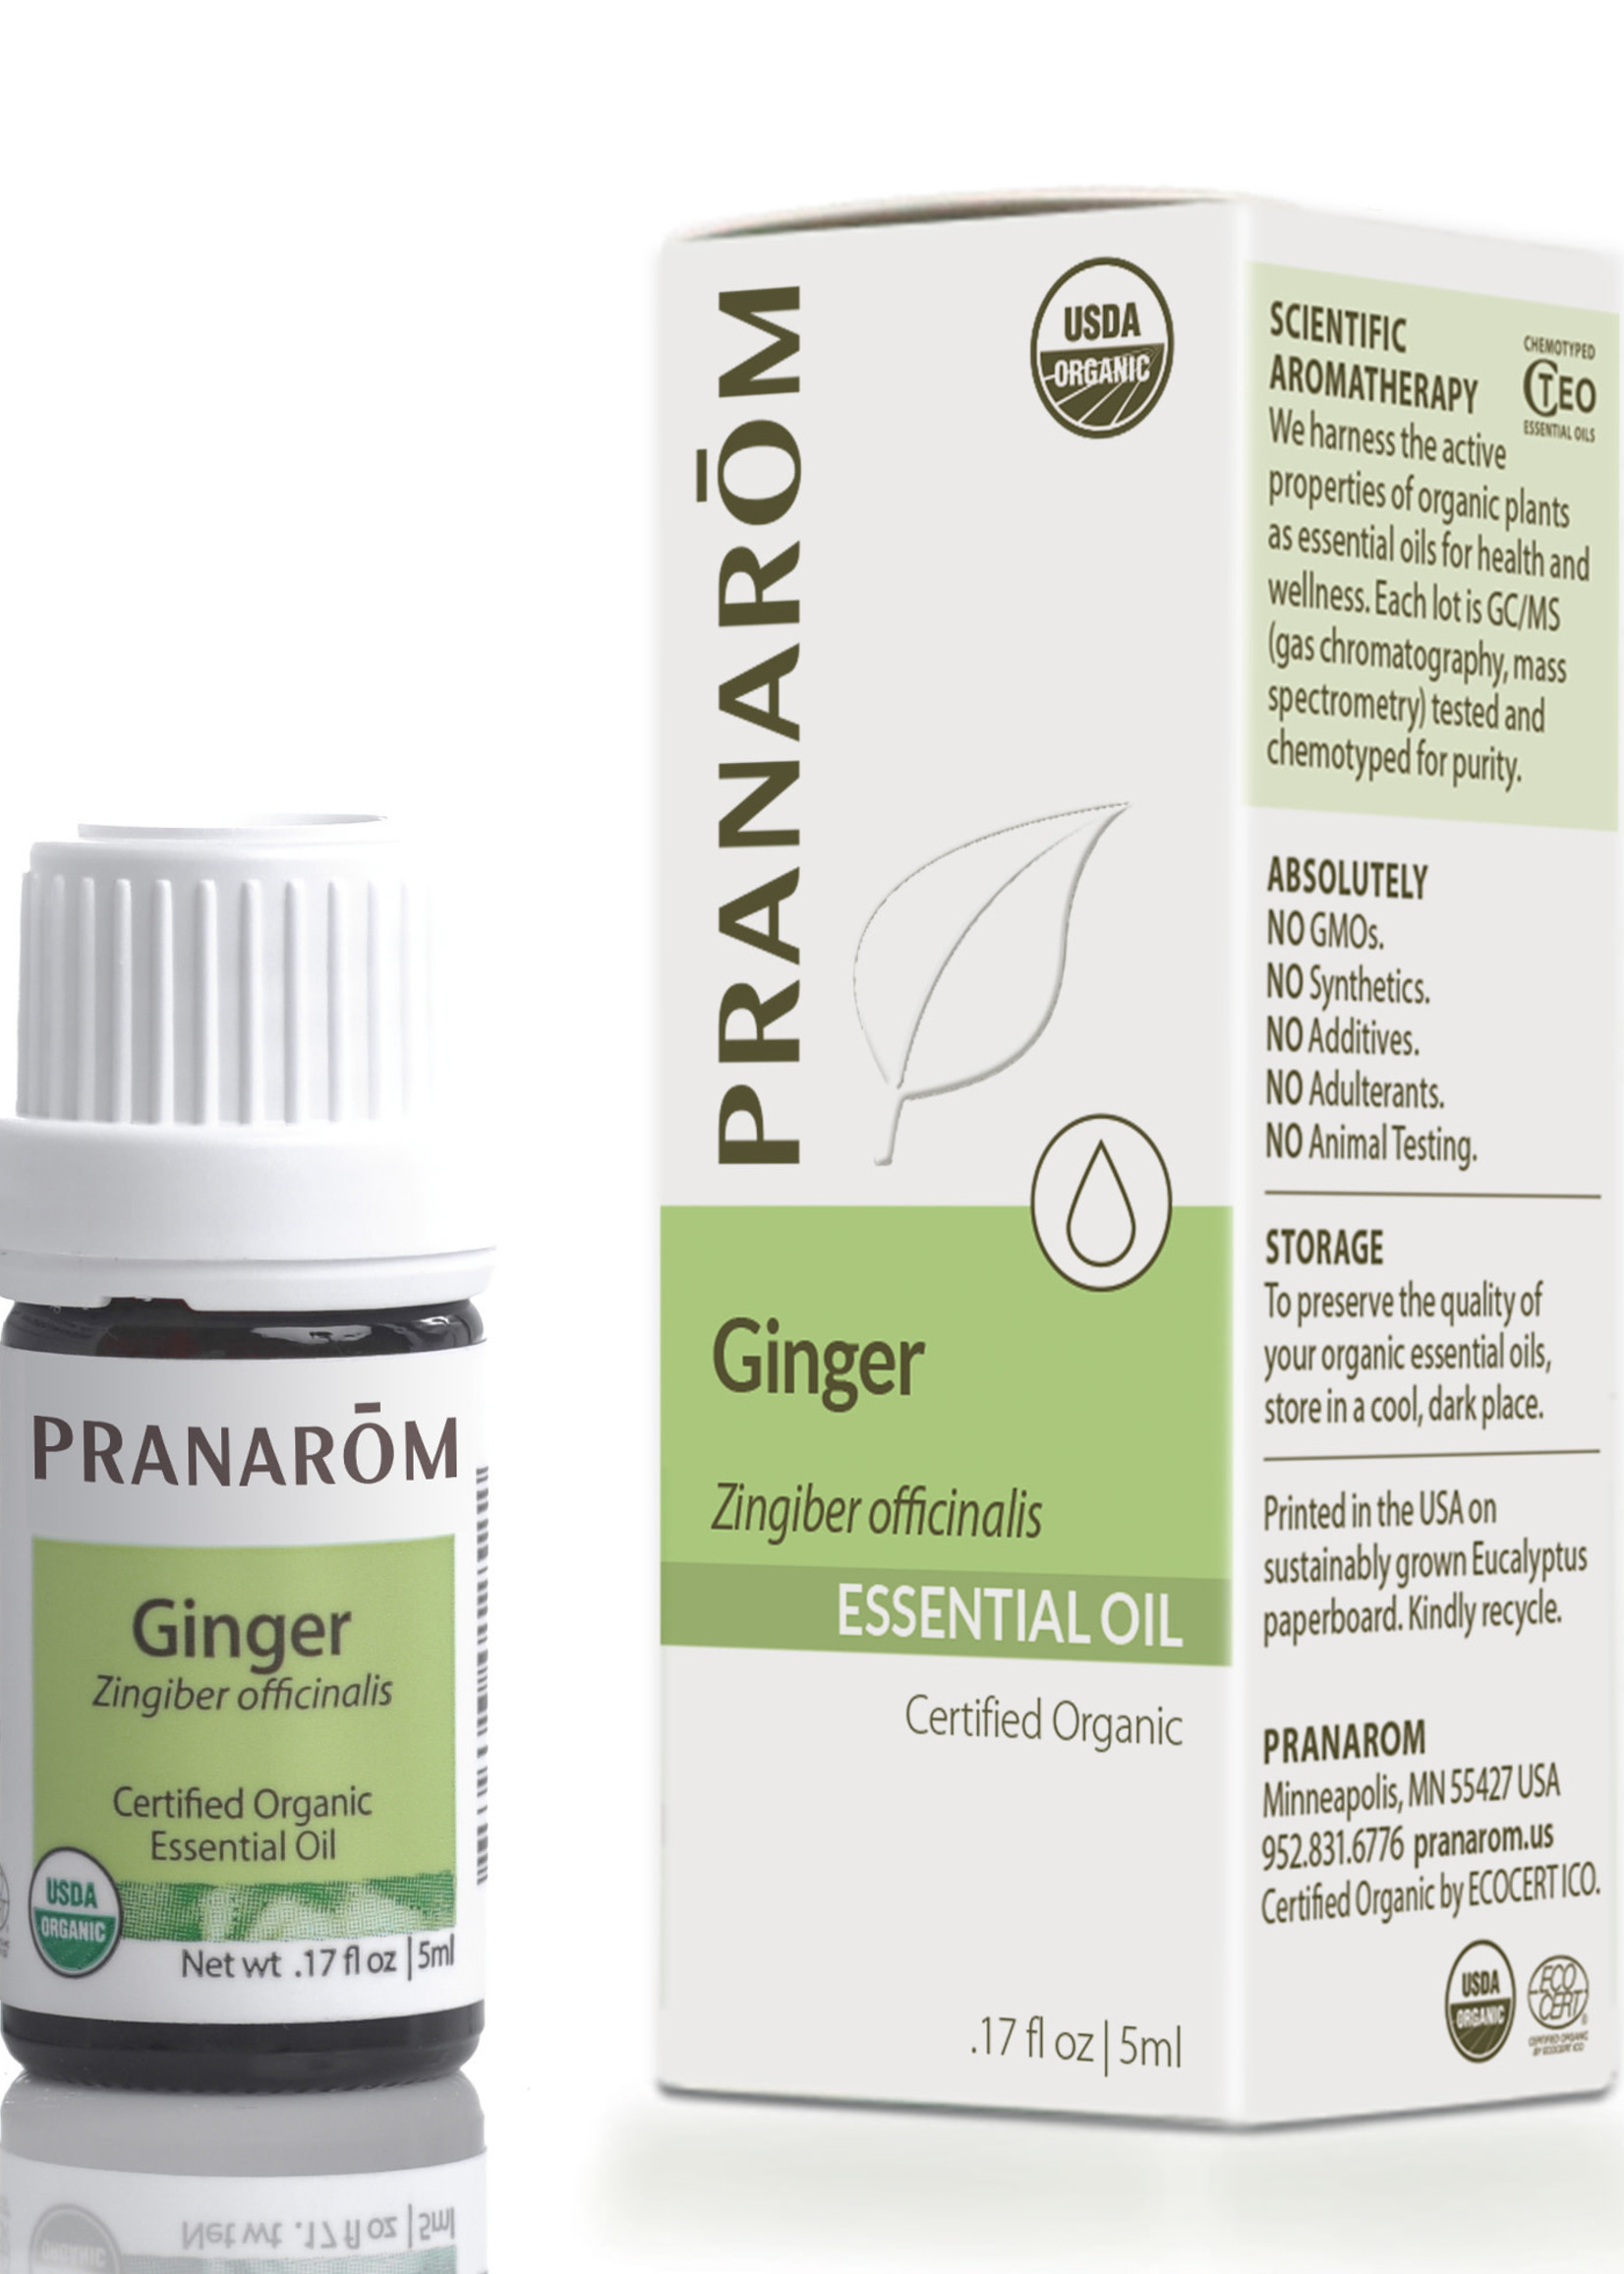 Pranoram Ginger 5ml (Zingiber officinalis)